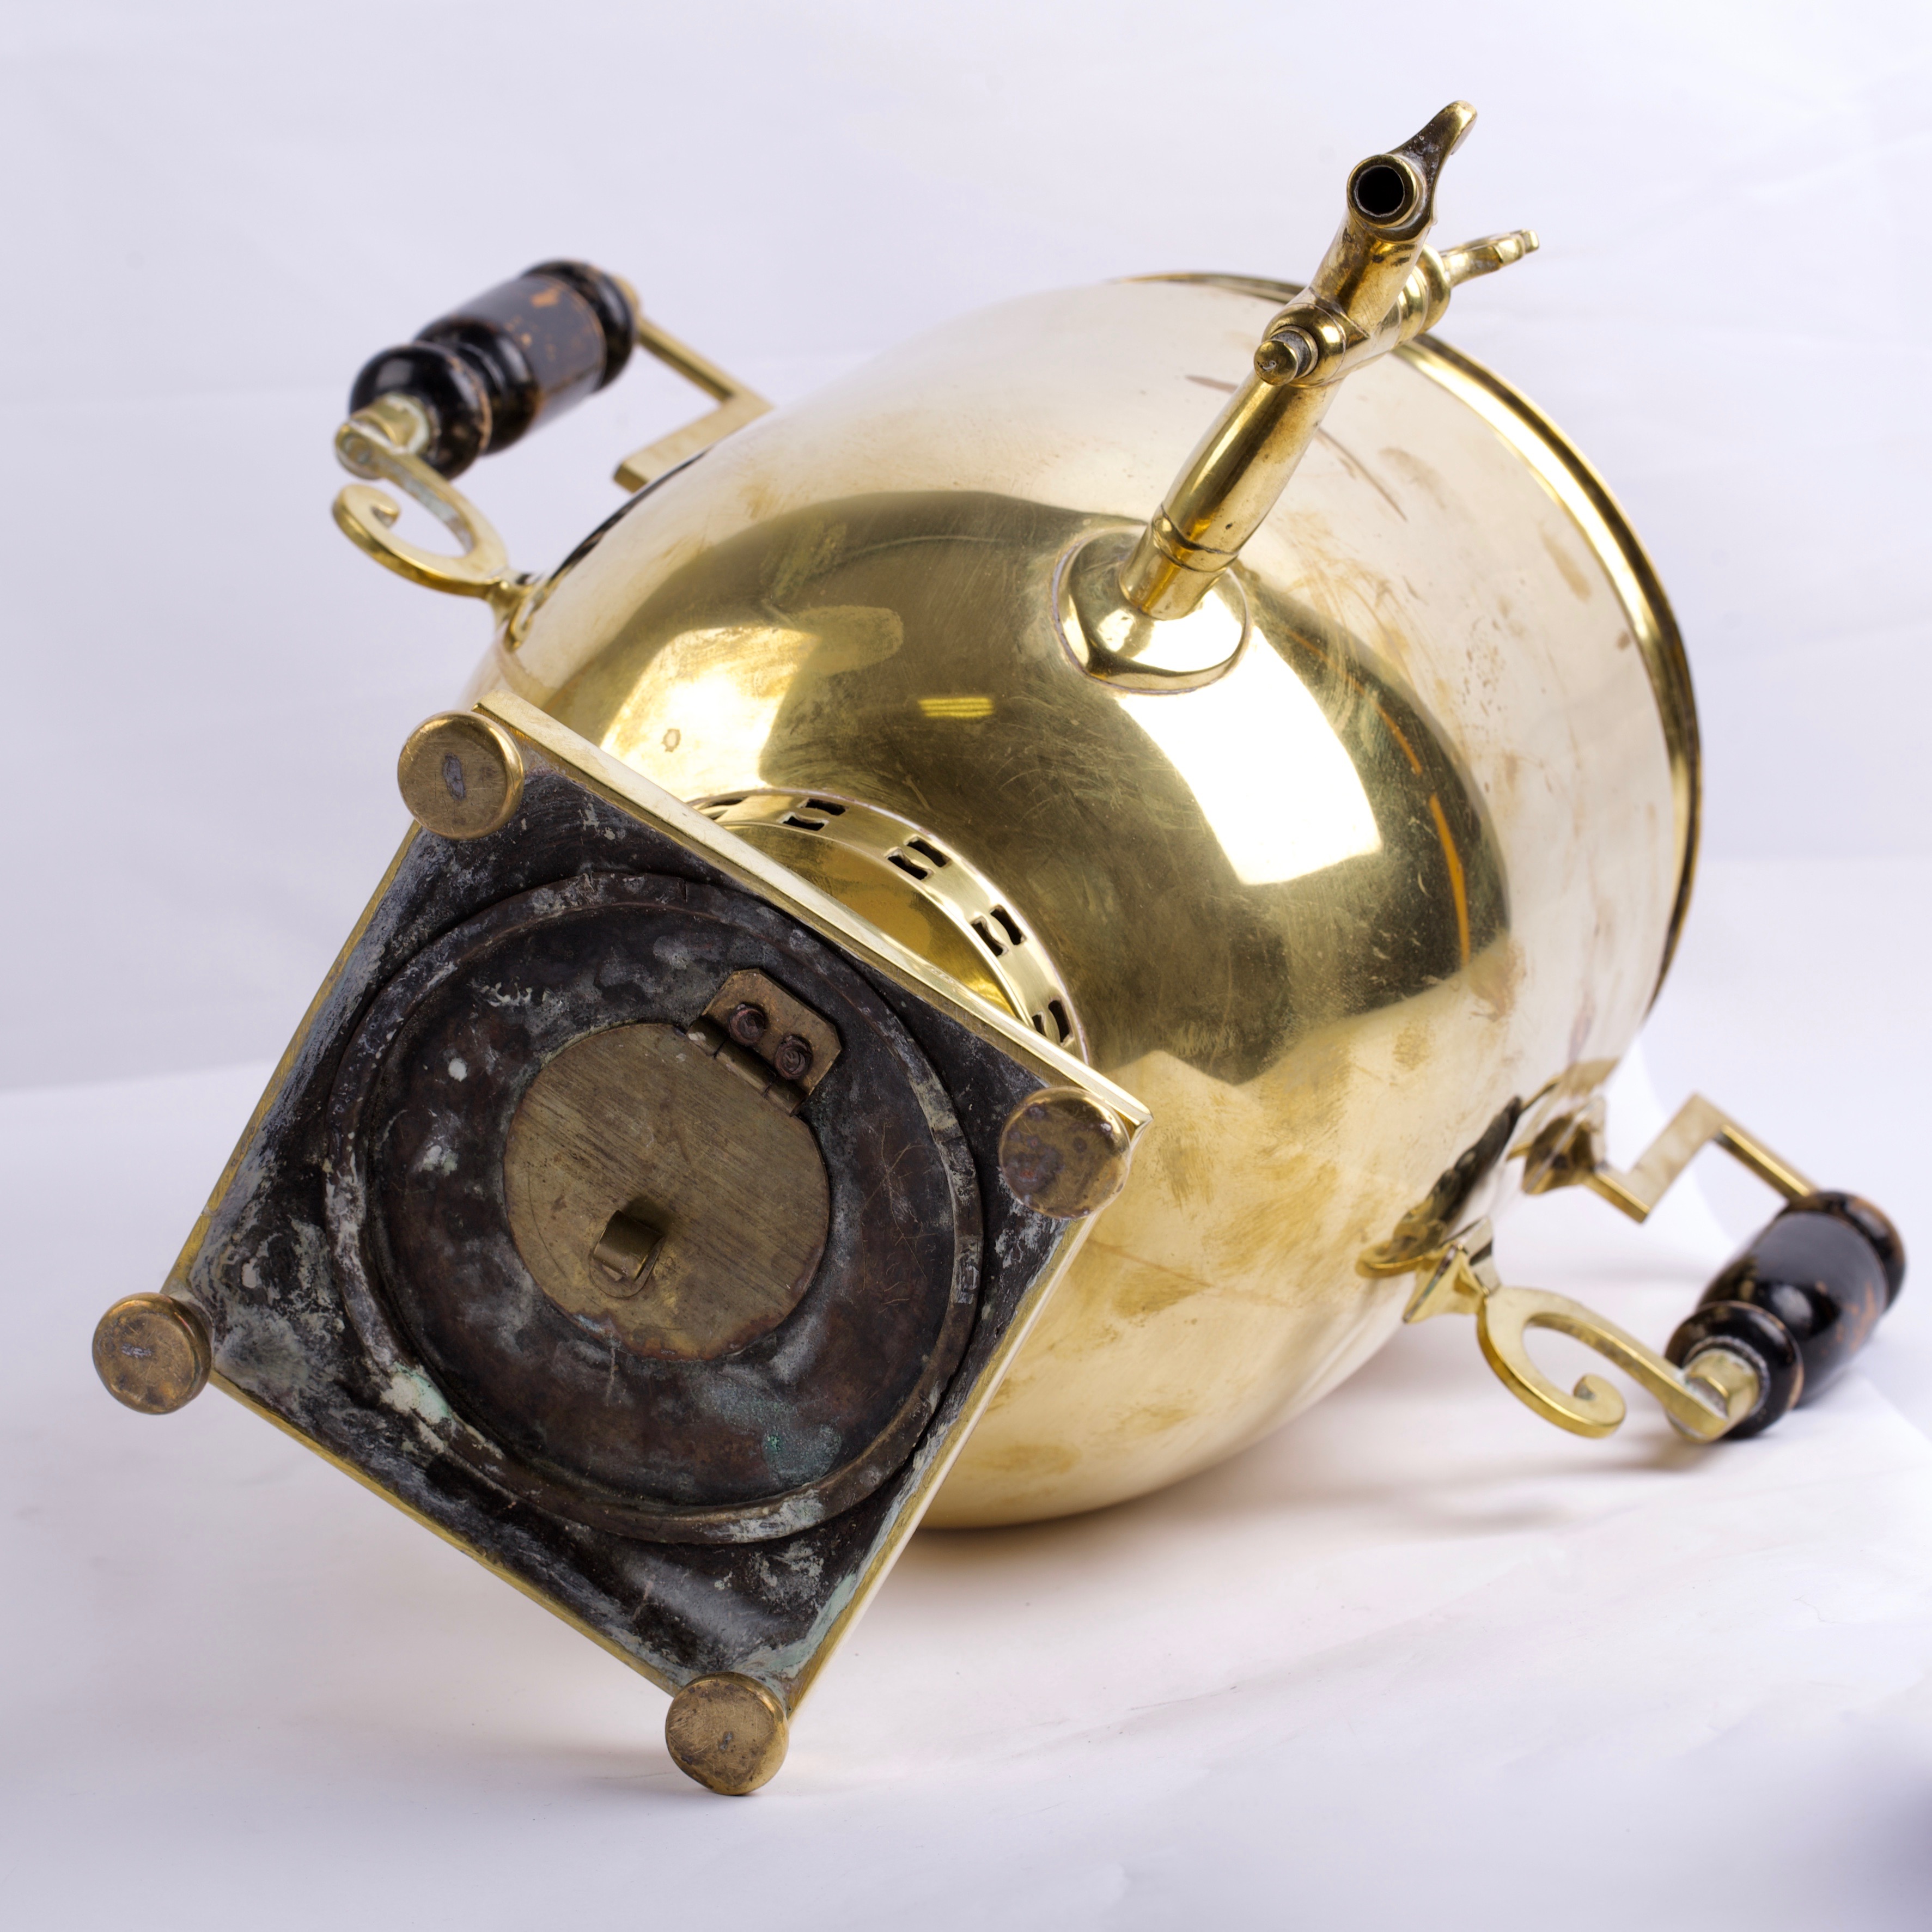 Russian brass samovar “Rudakov” - Antique weapons, collectibles